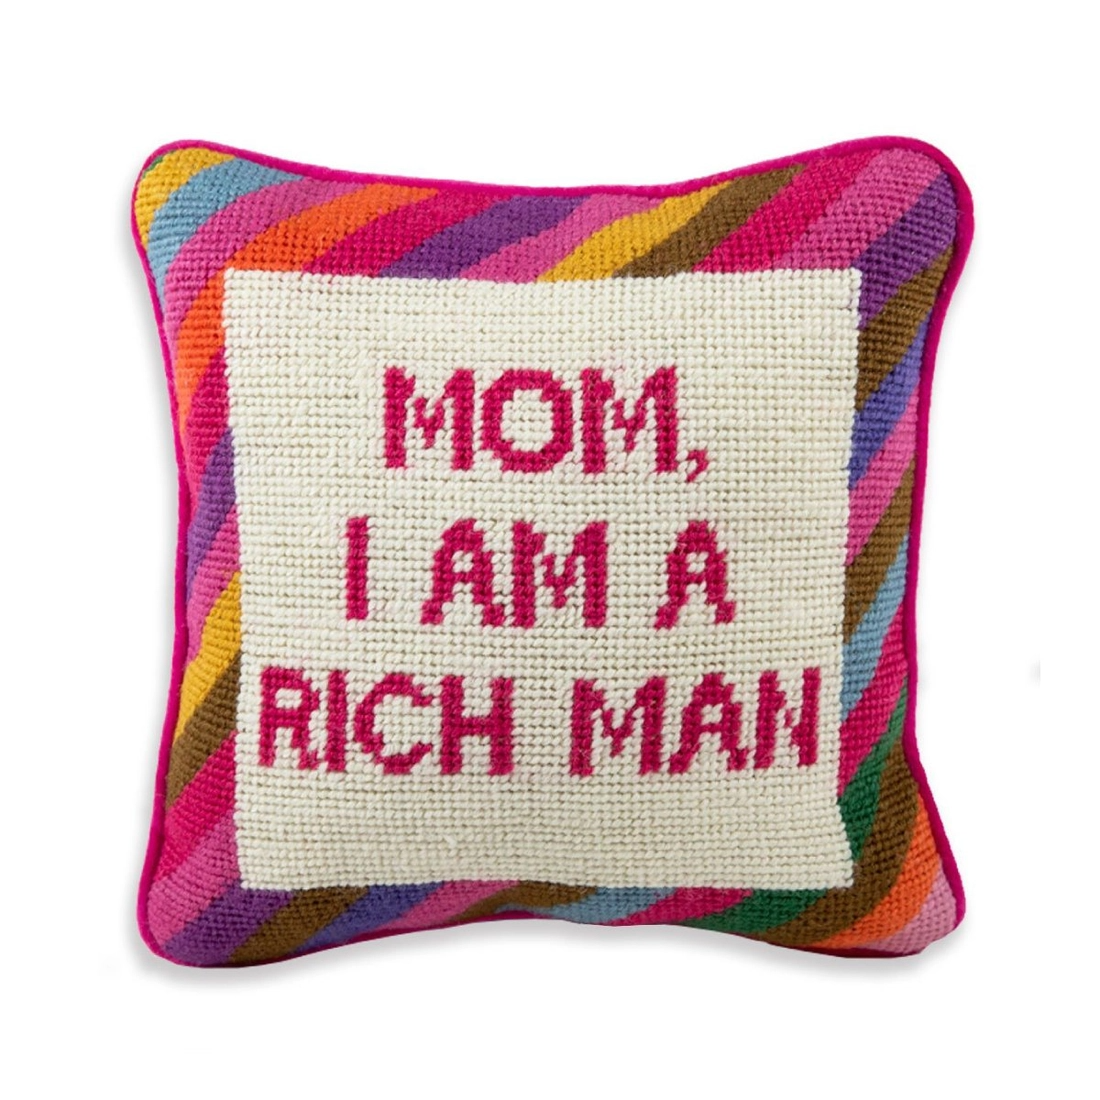 "Mom I’m a rich man" needlepoint pillow